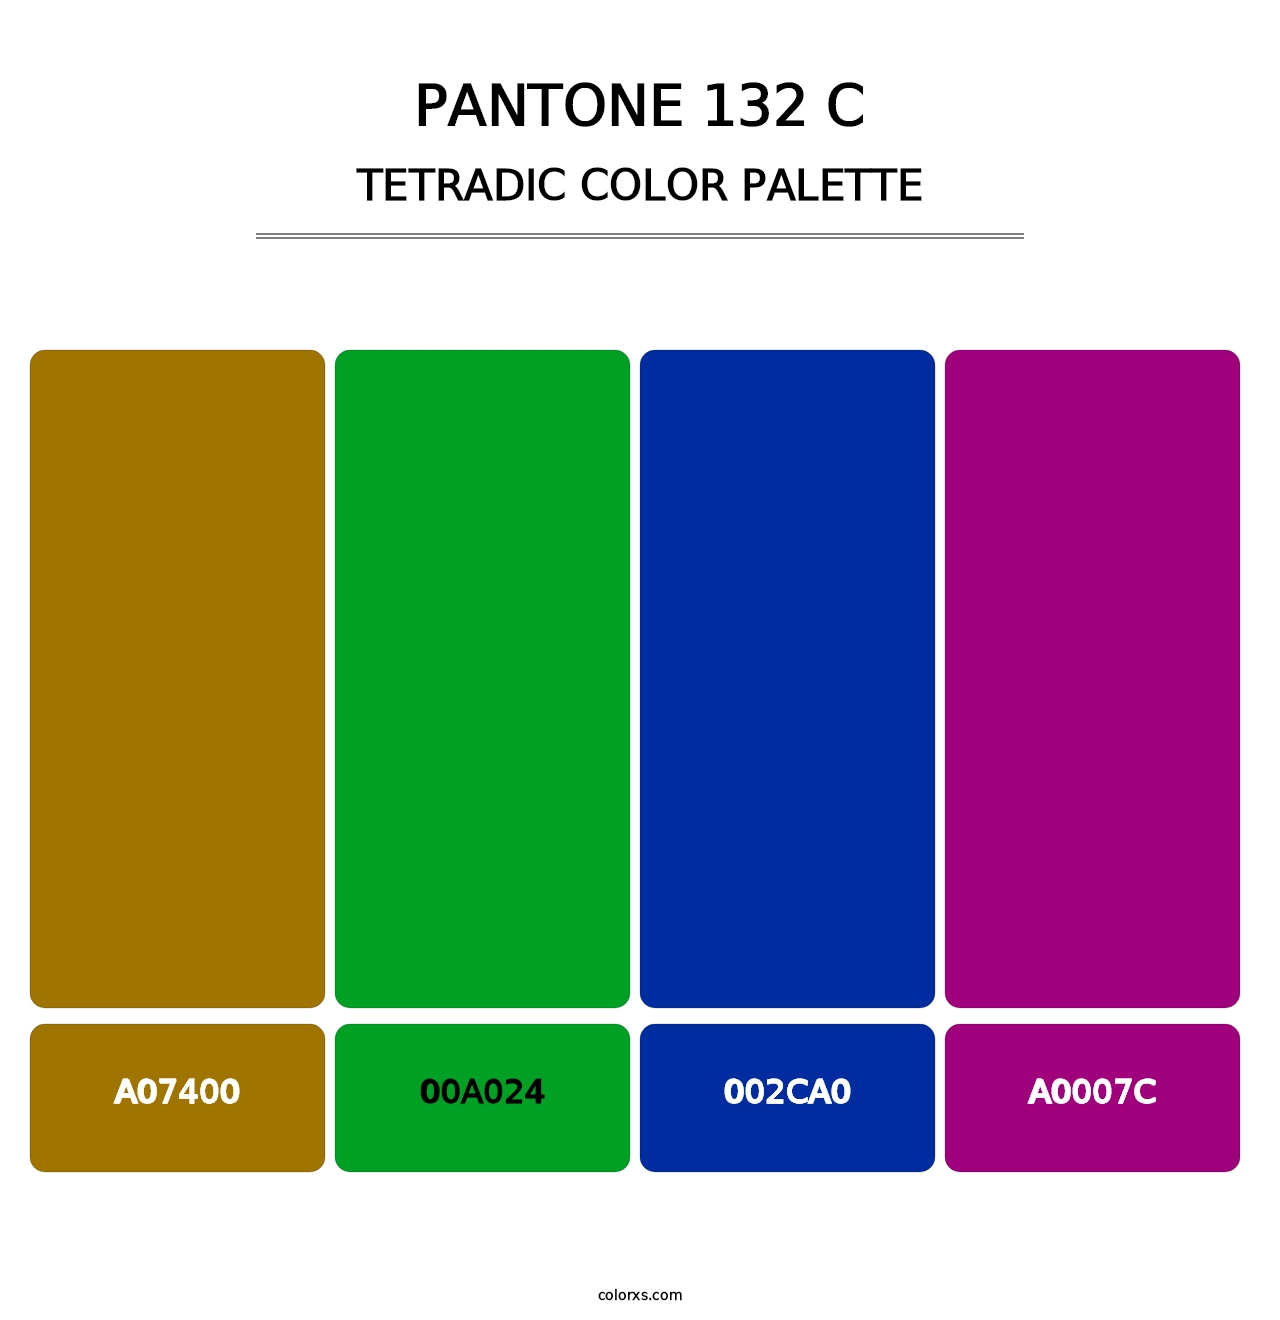 PANTONE 132 C - Tetradic Color Palette